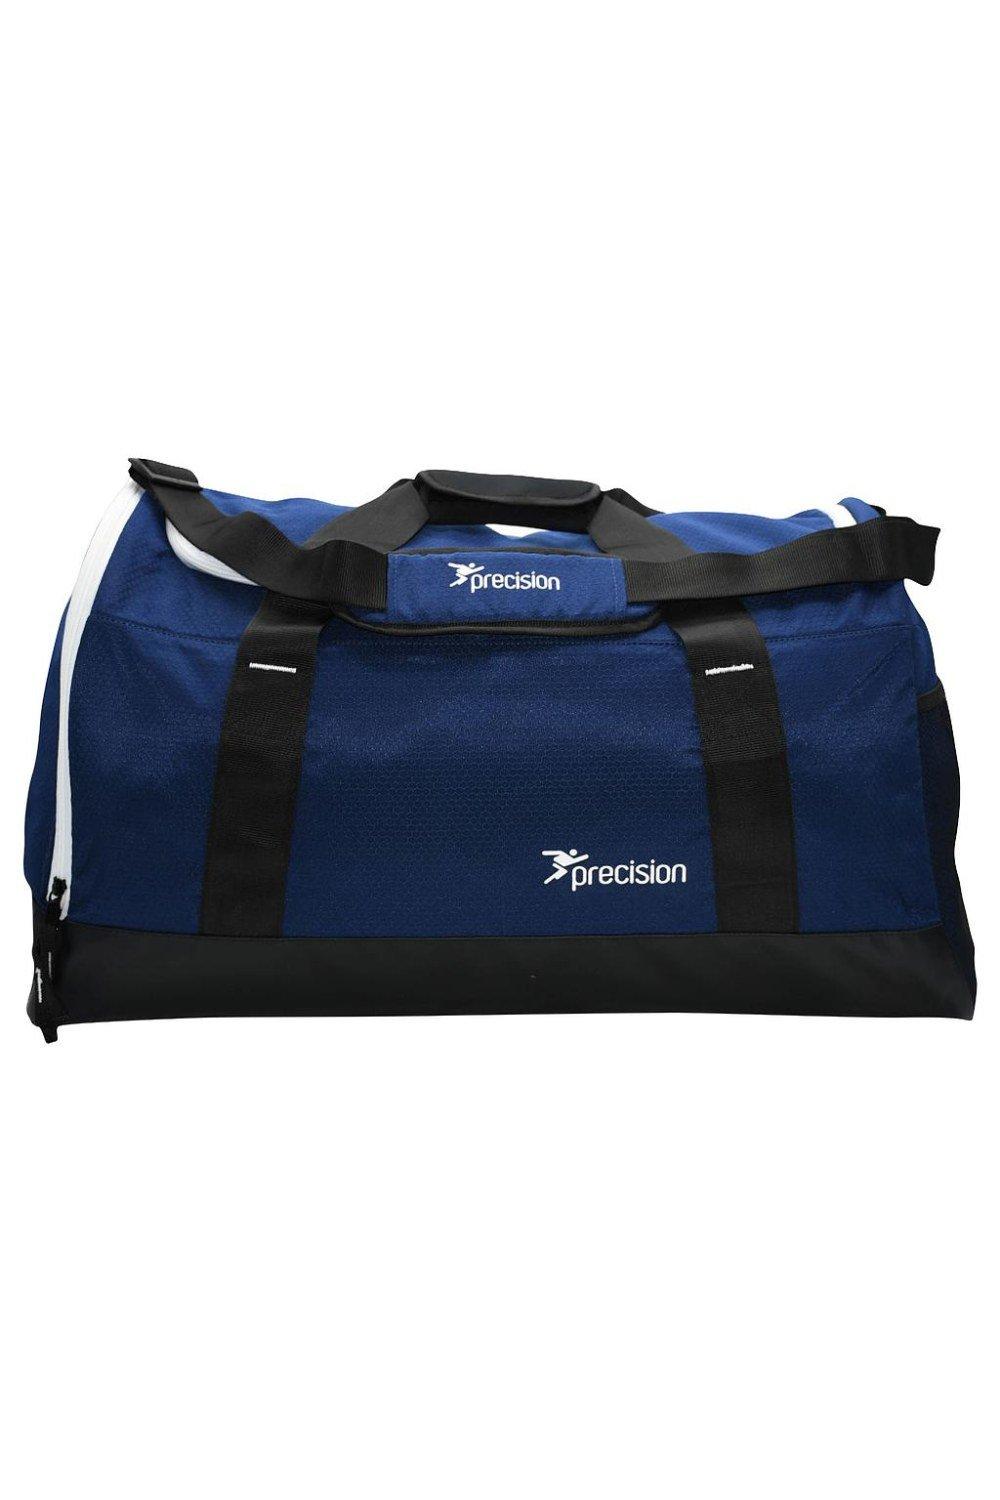 Дорожная сумка Pro Hx Team Precision, темно-синий бак нерж 95л под контур г эллипс ferrum